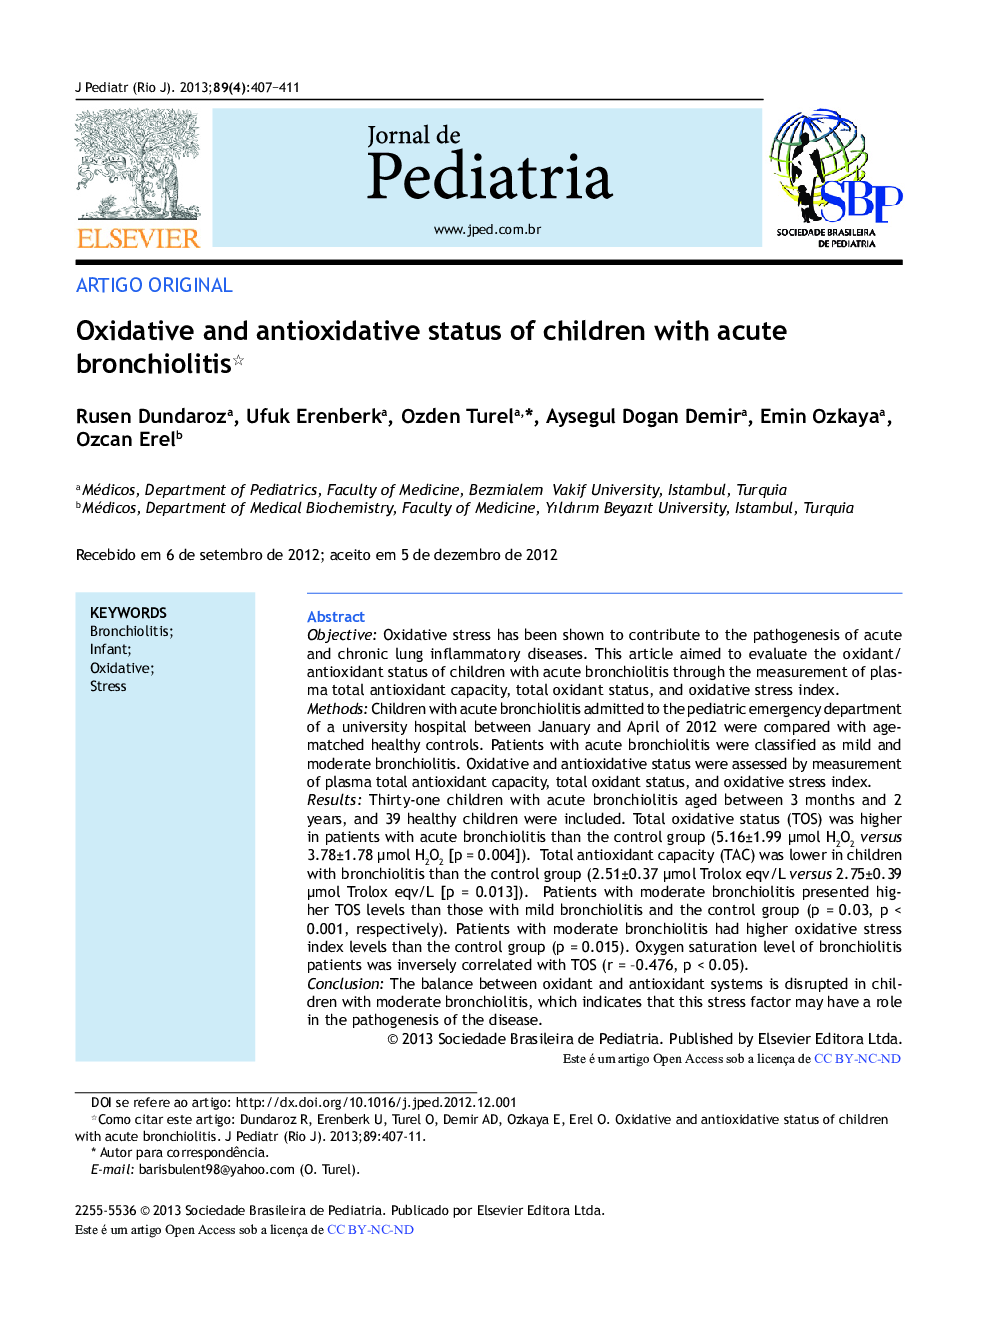 Oxidative and antioxidative status of children with acute bronchiolitis 